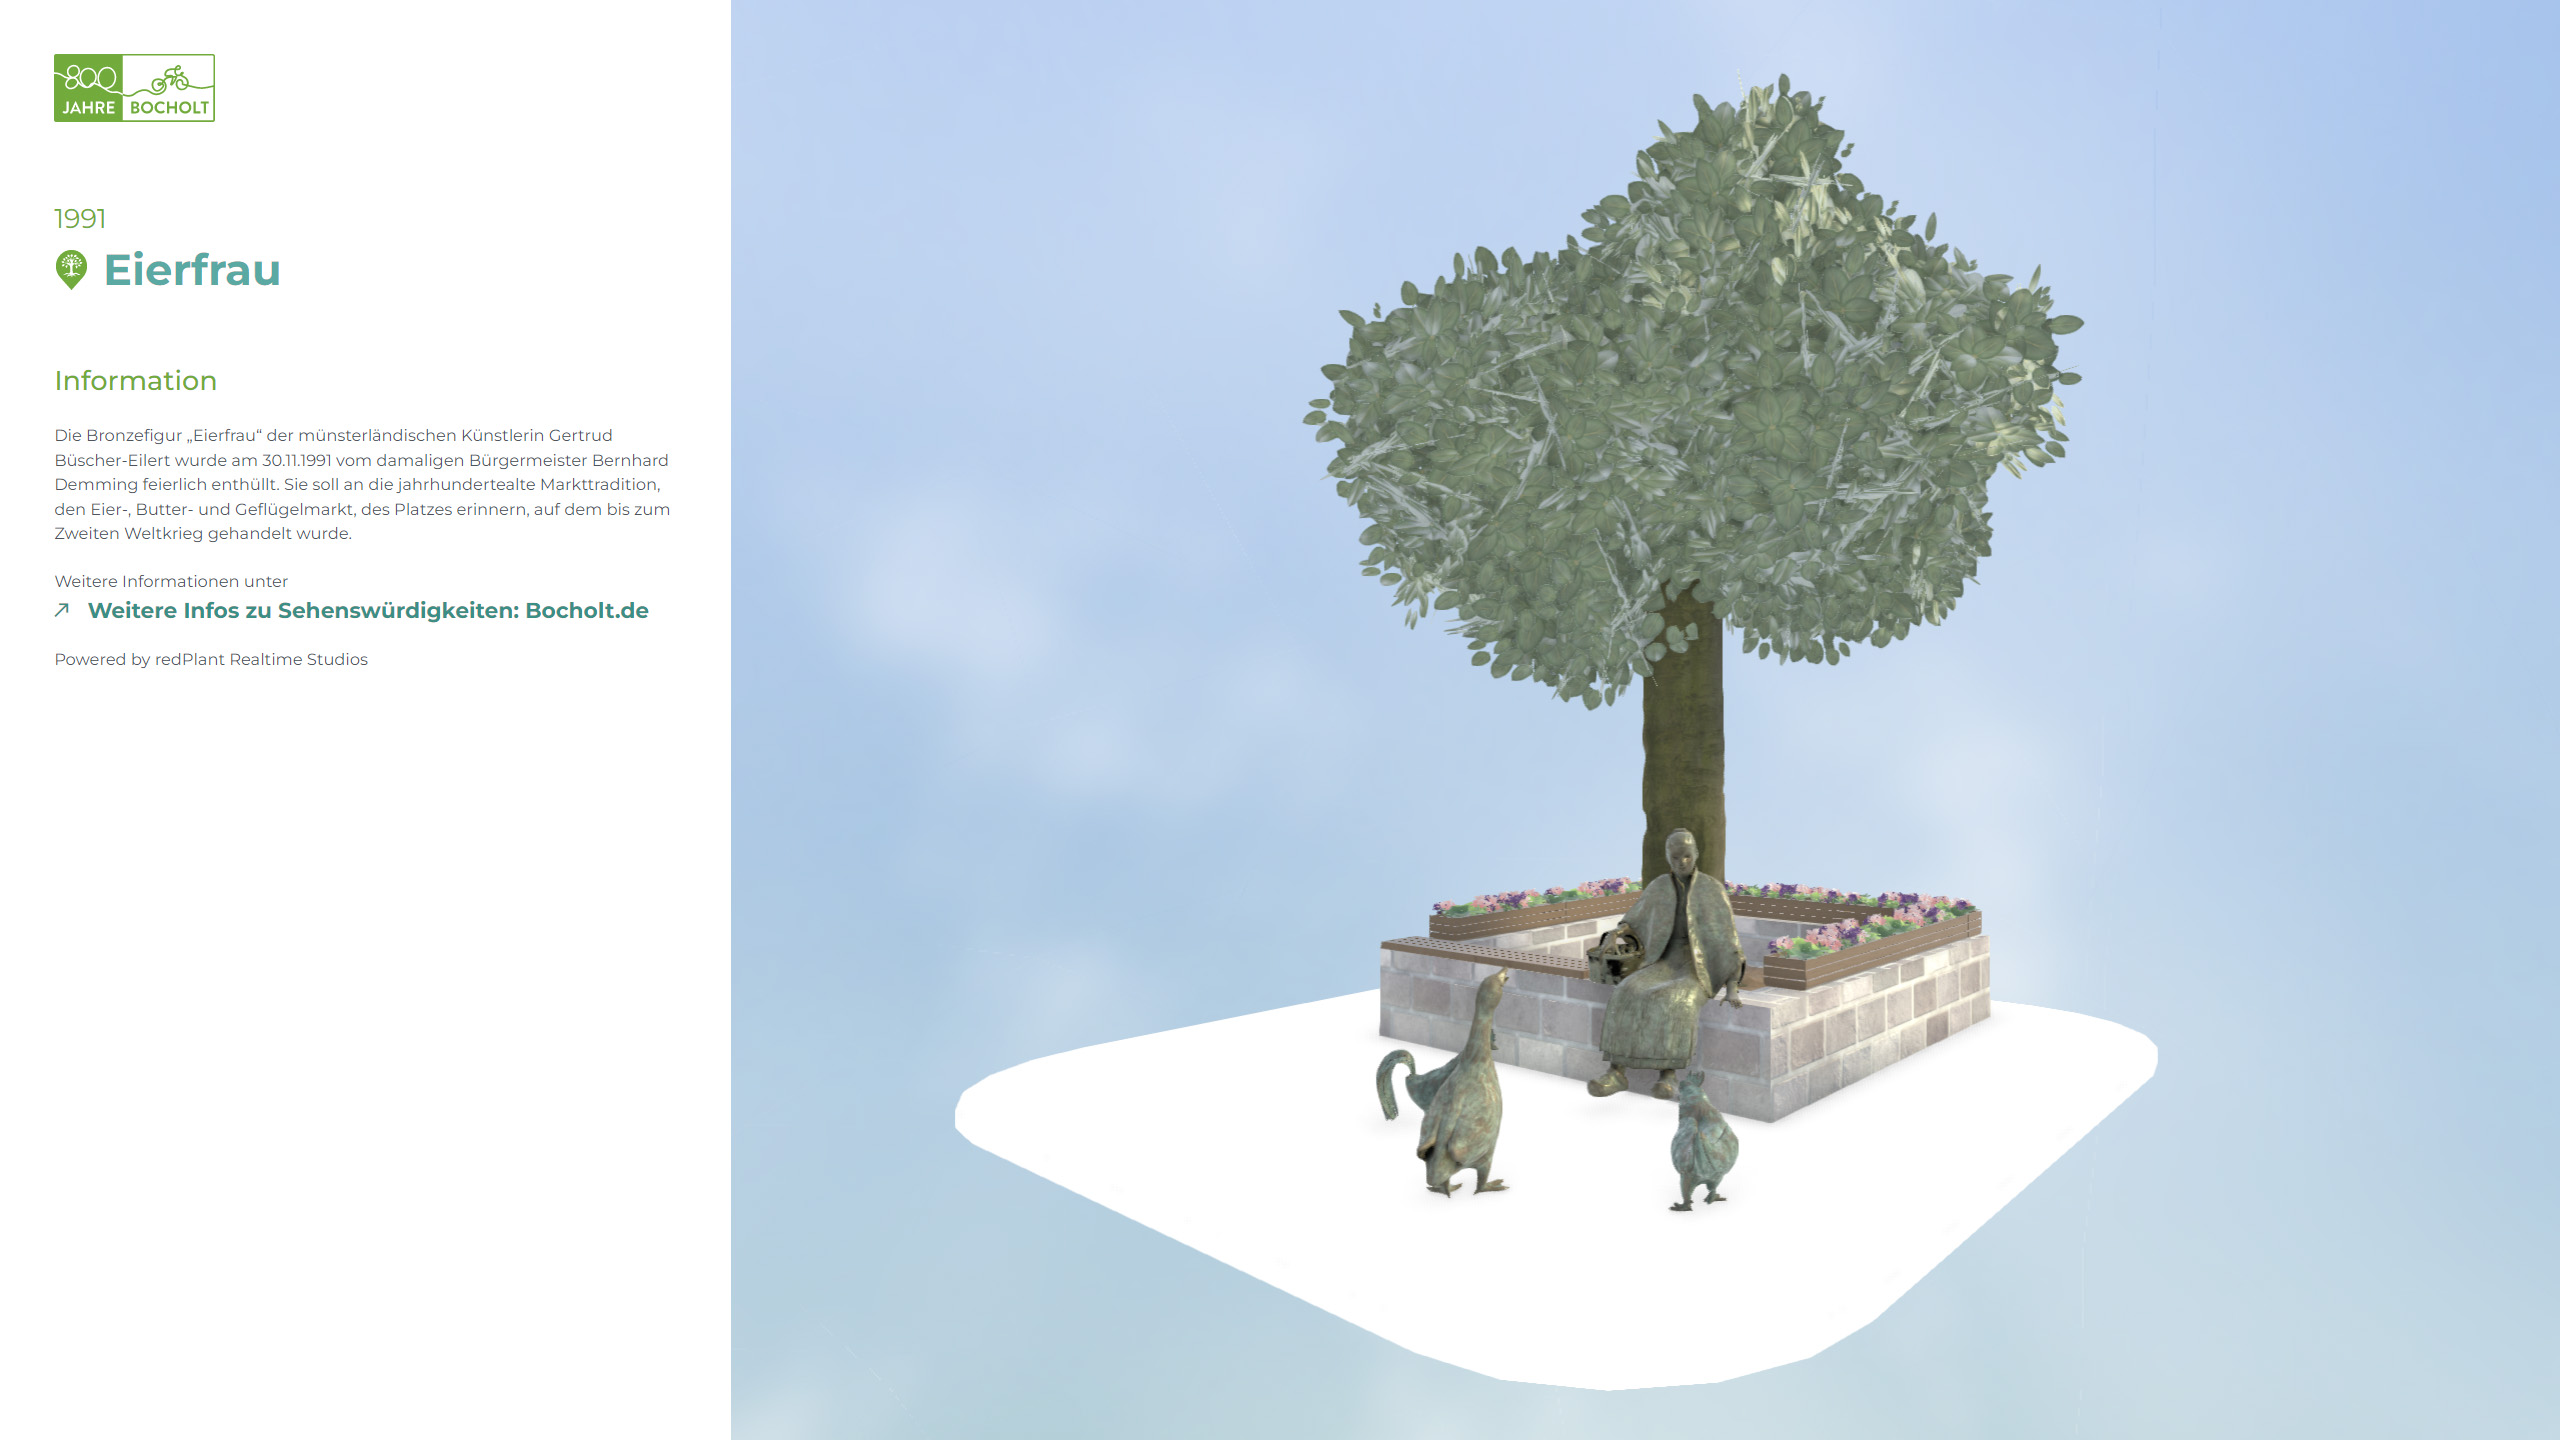 webgl application interaktives Stadtmodell eierfrau stadtmarketing bocholt